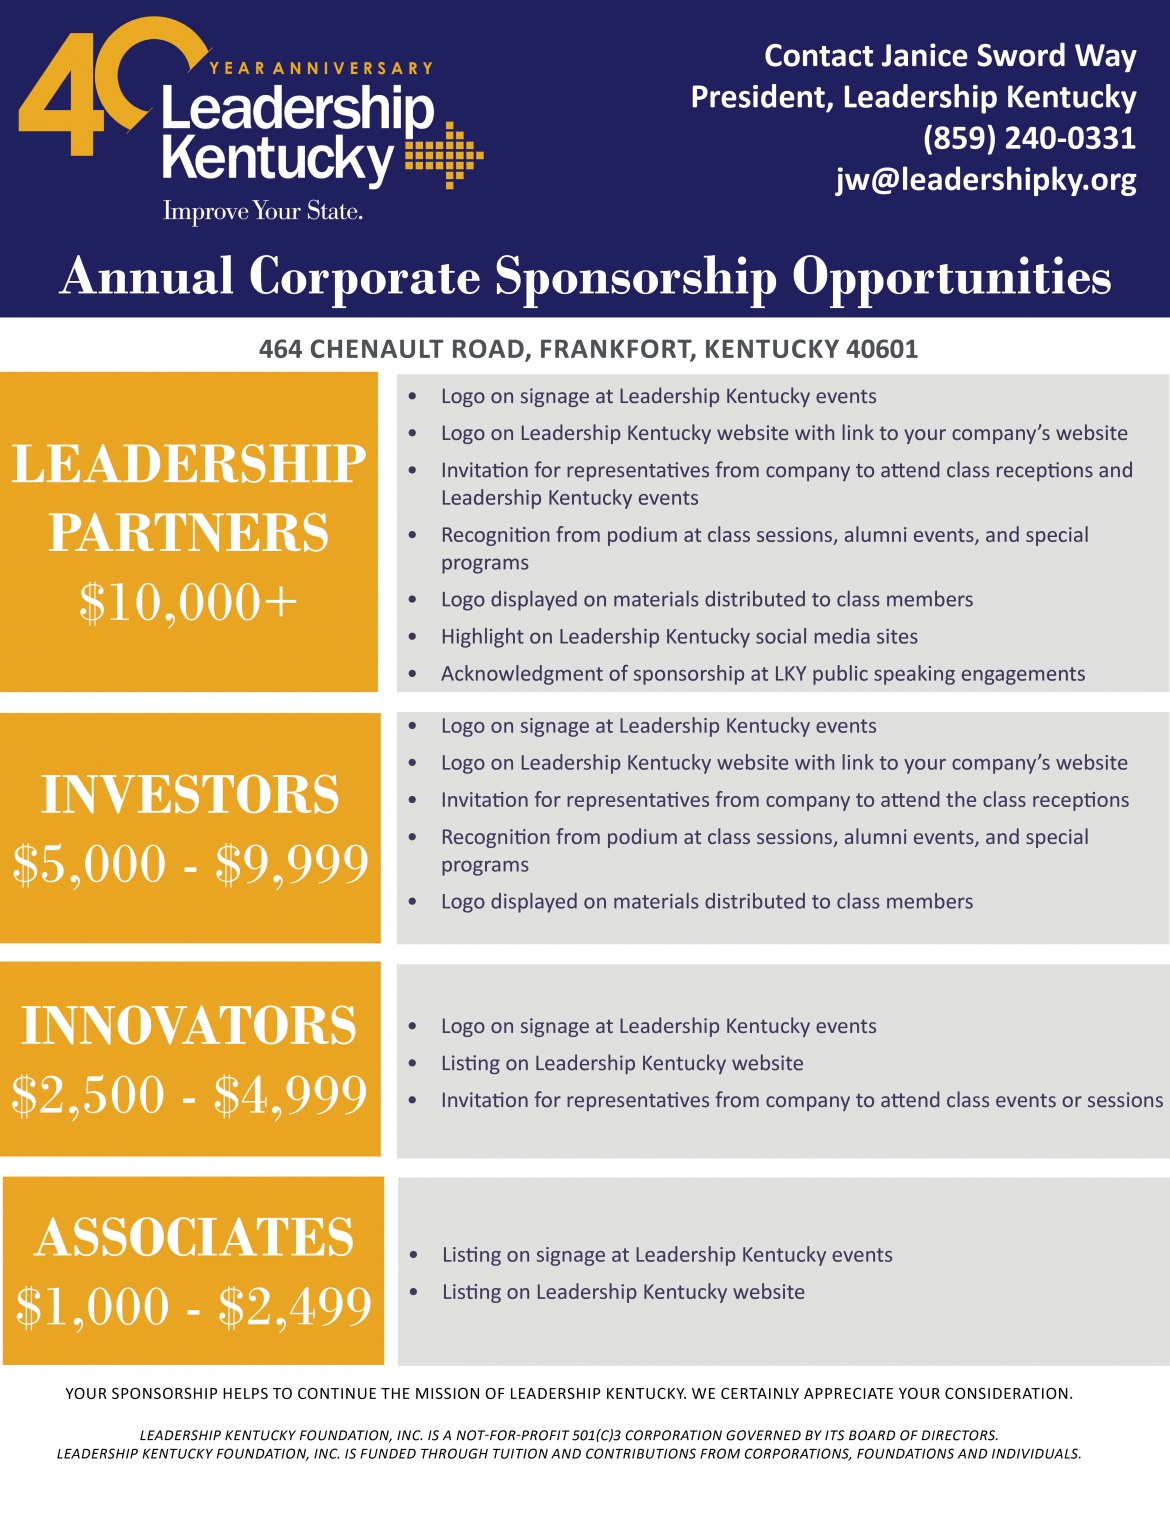 Annual Corporate Sponsorship